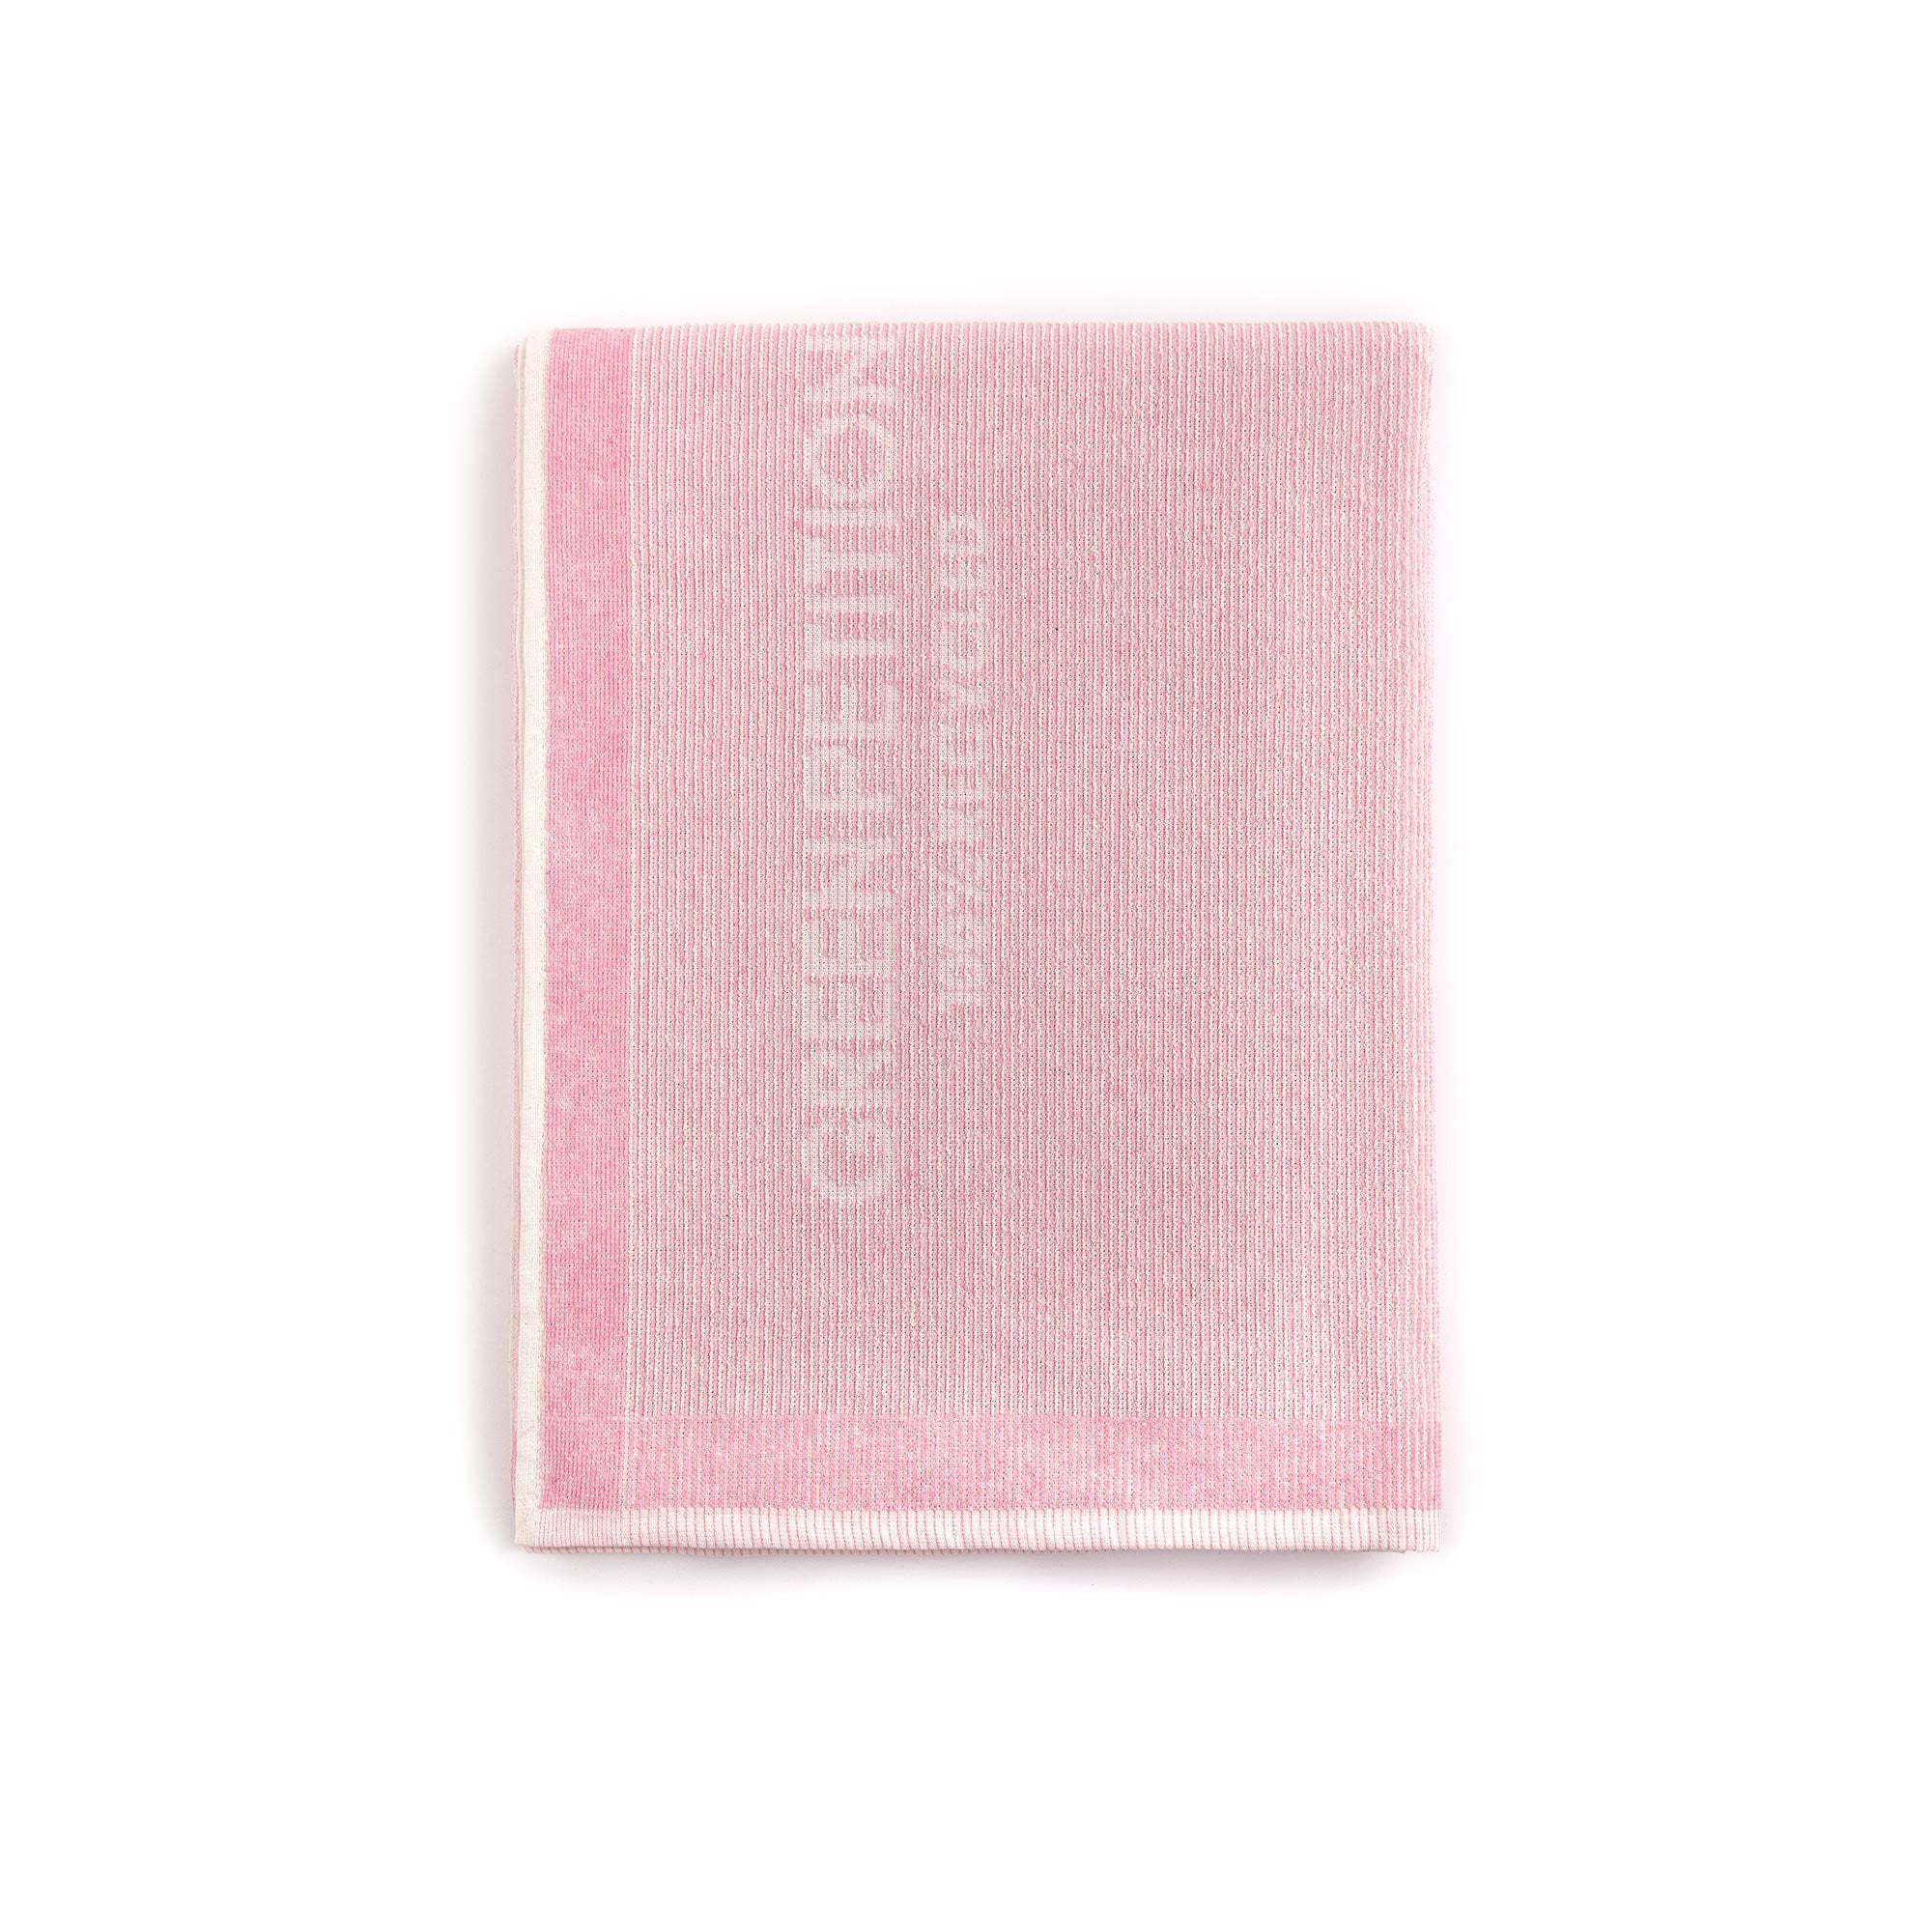 Calm Peaceful Towel 100x180 cm Candy